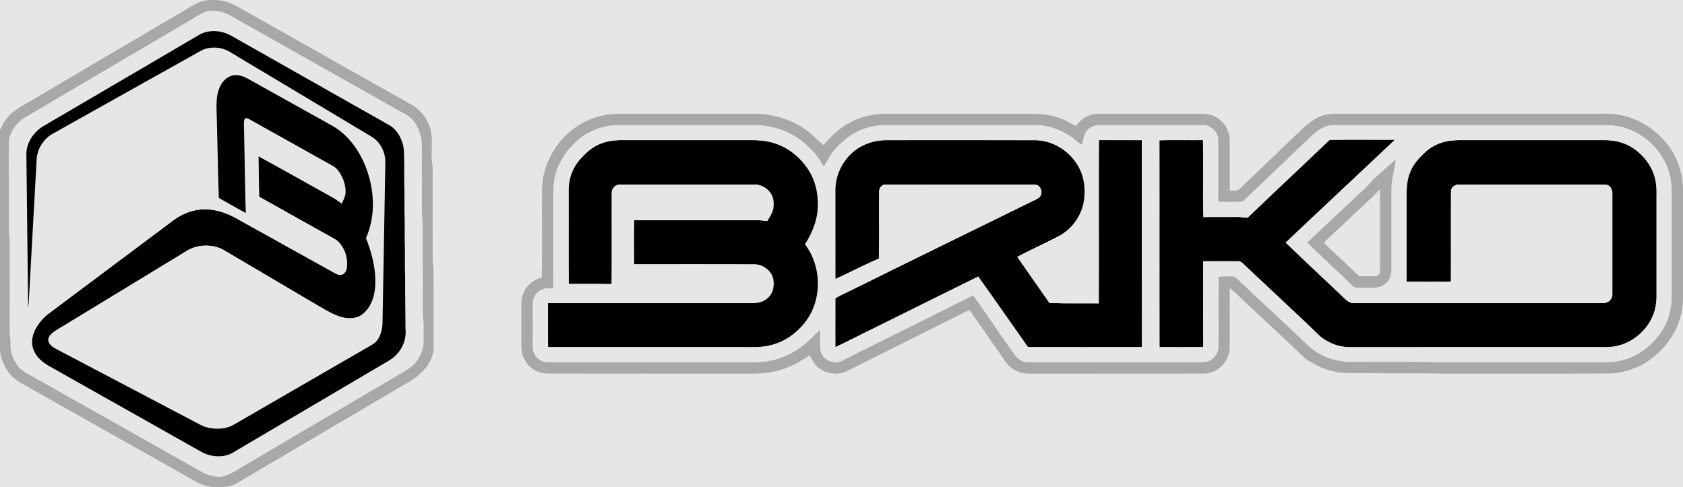 Logo Briko